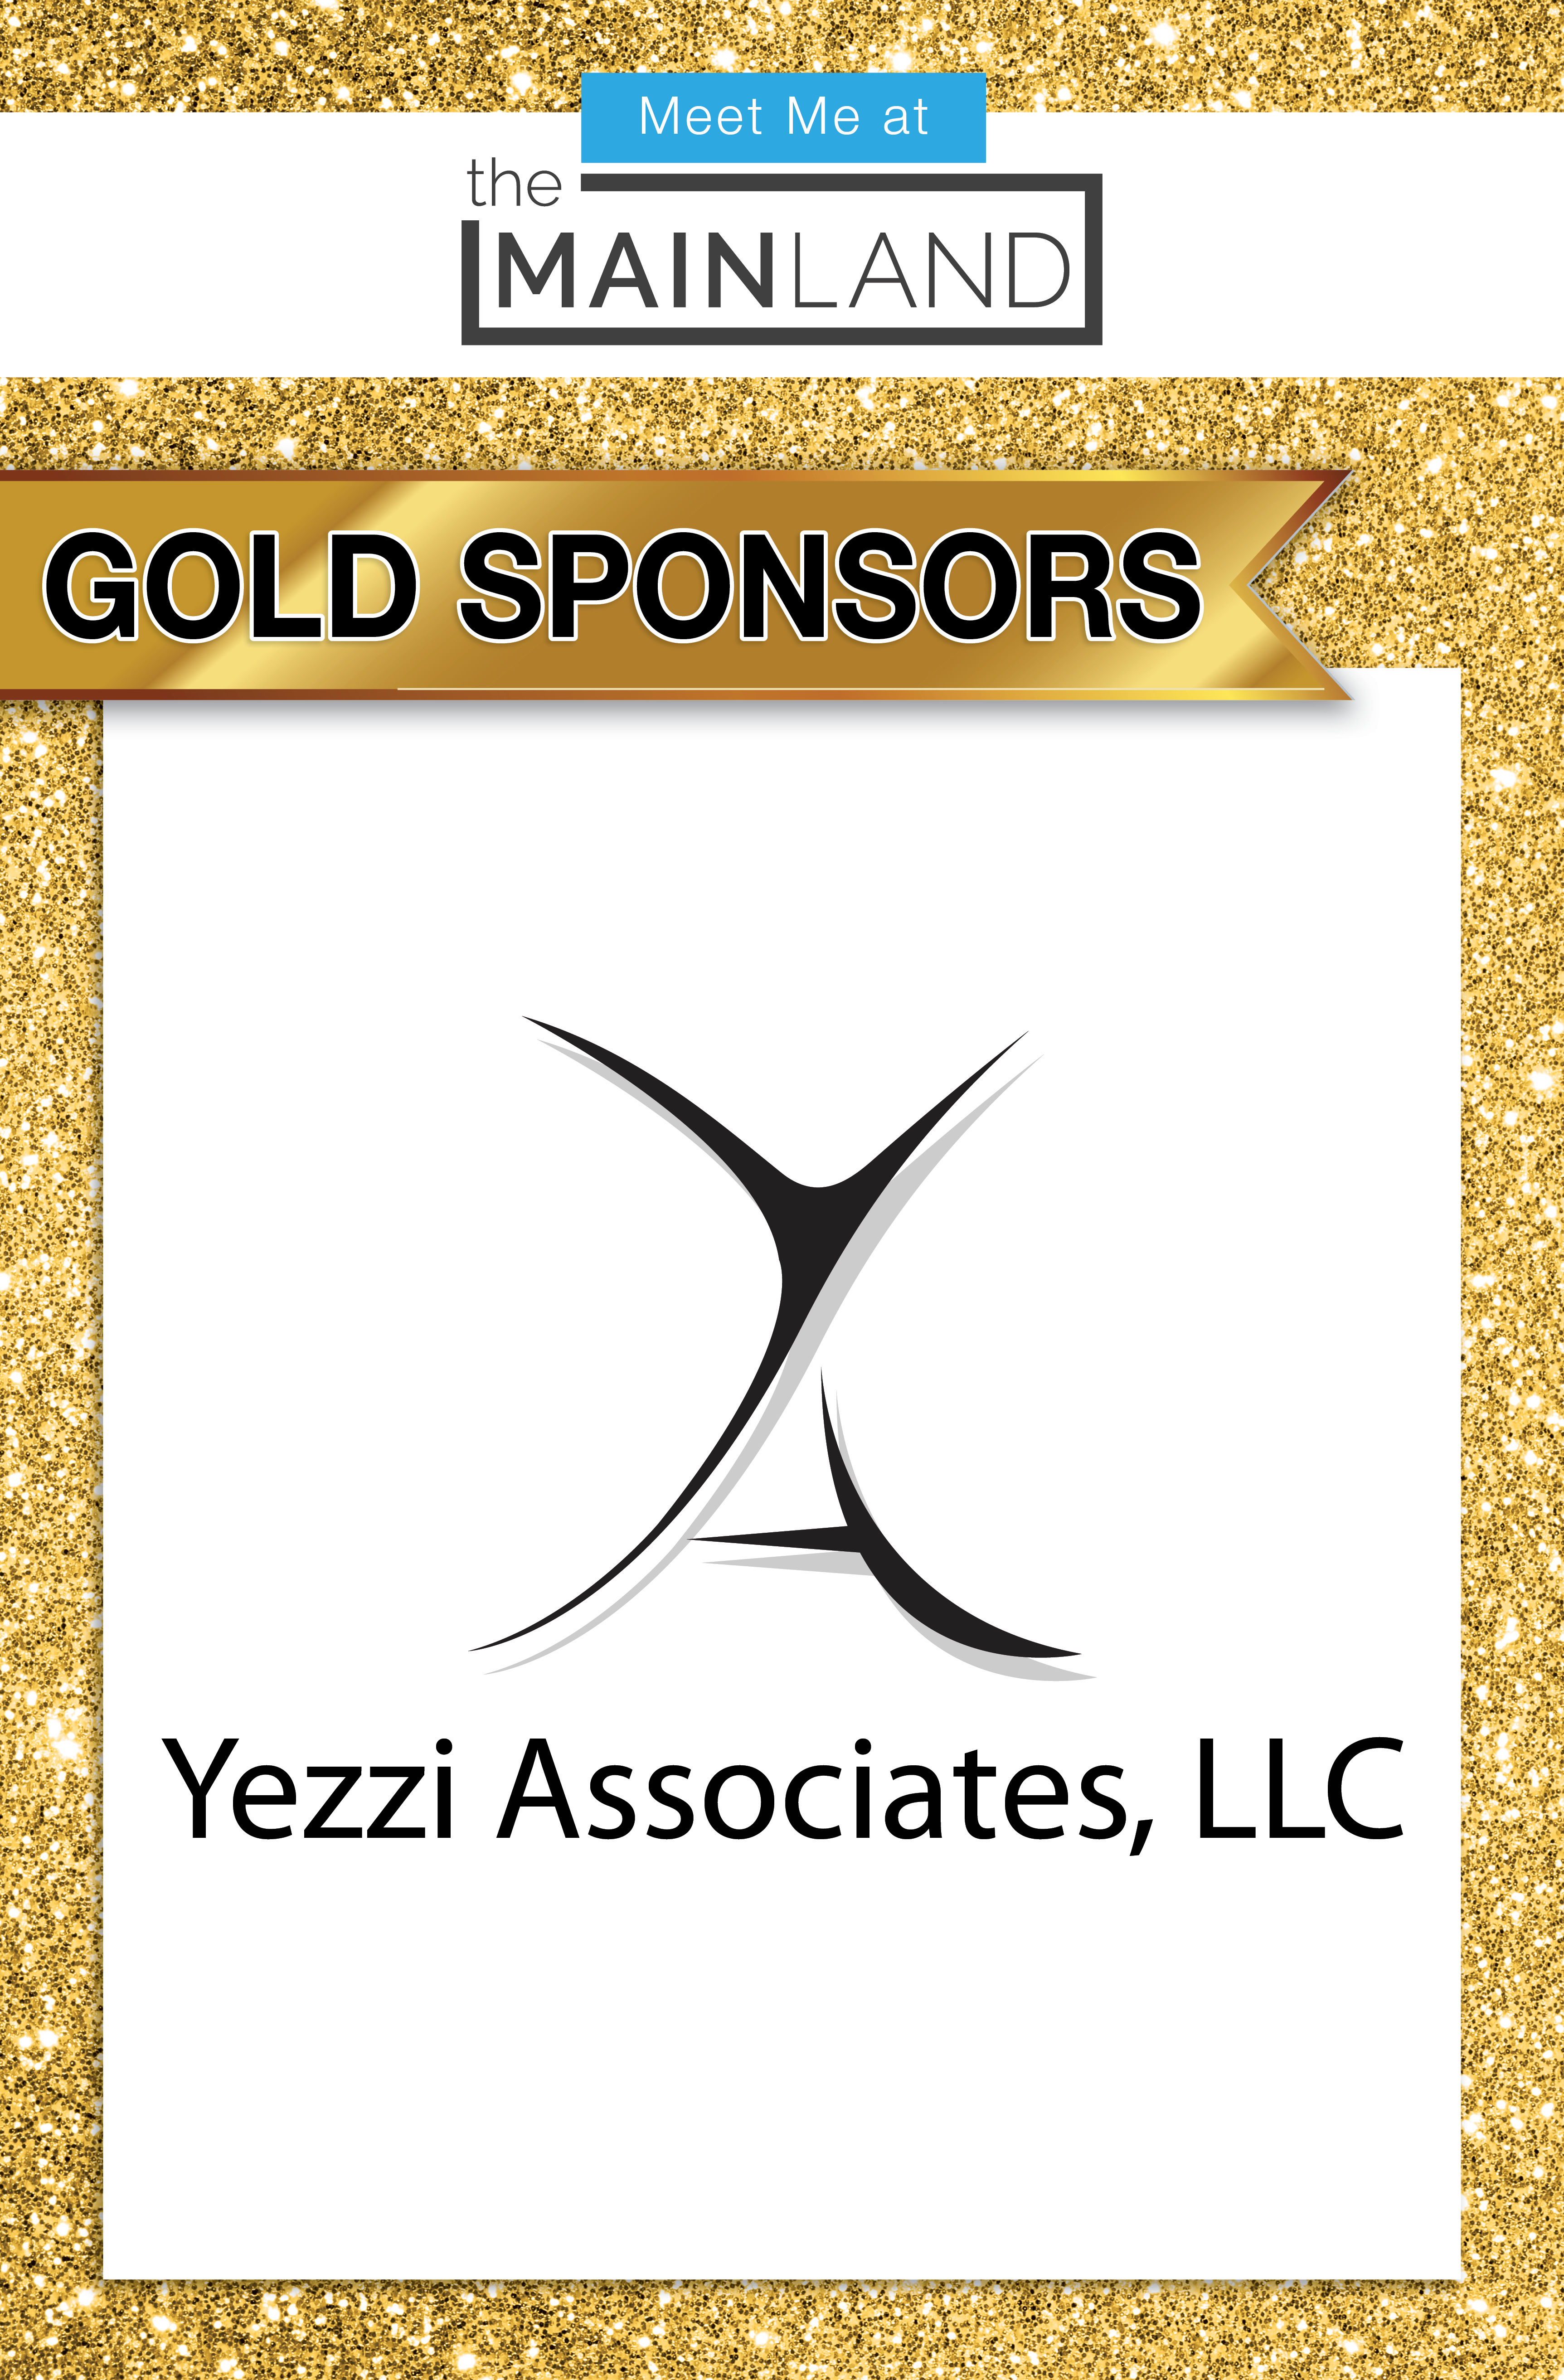 Gold Sponsor Yezzi Associates, LLC